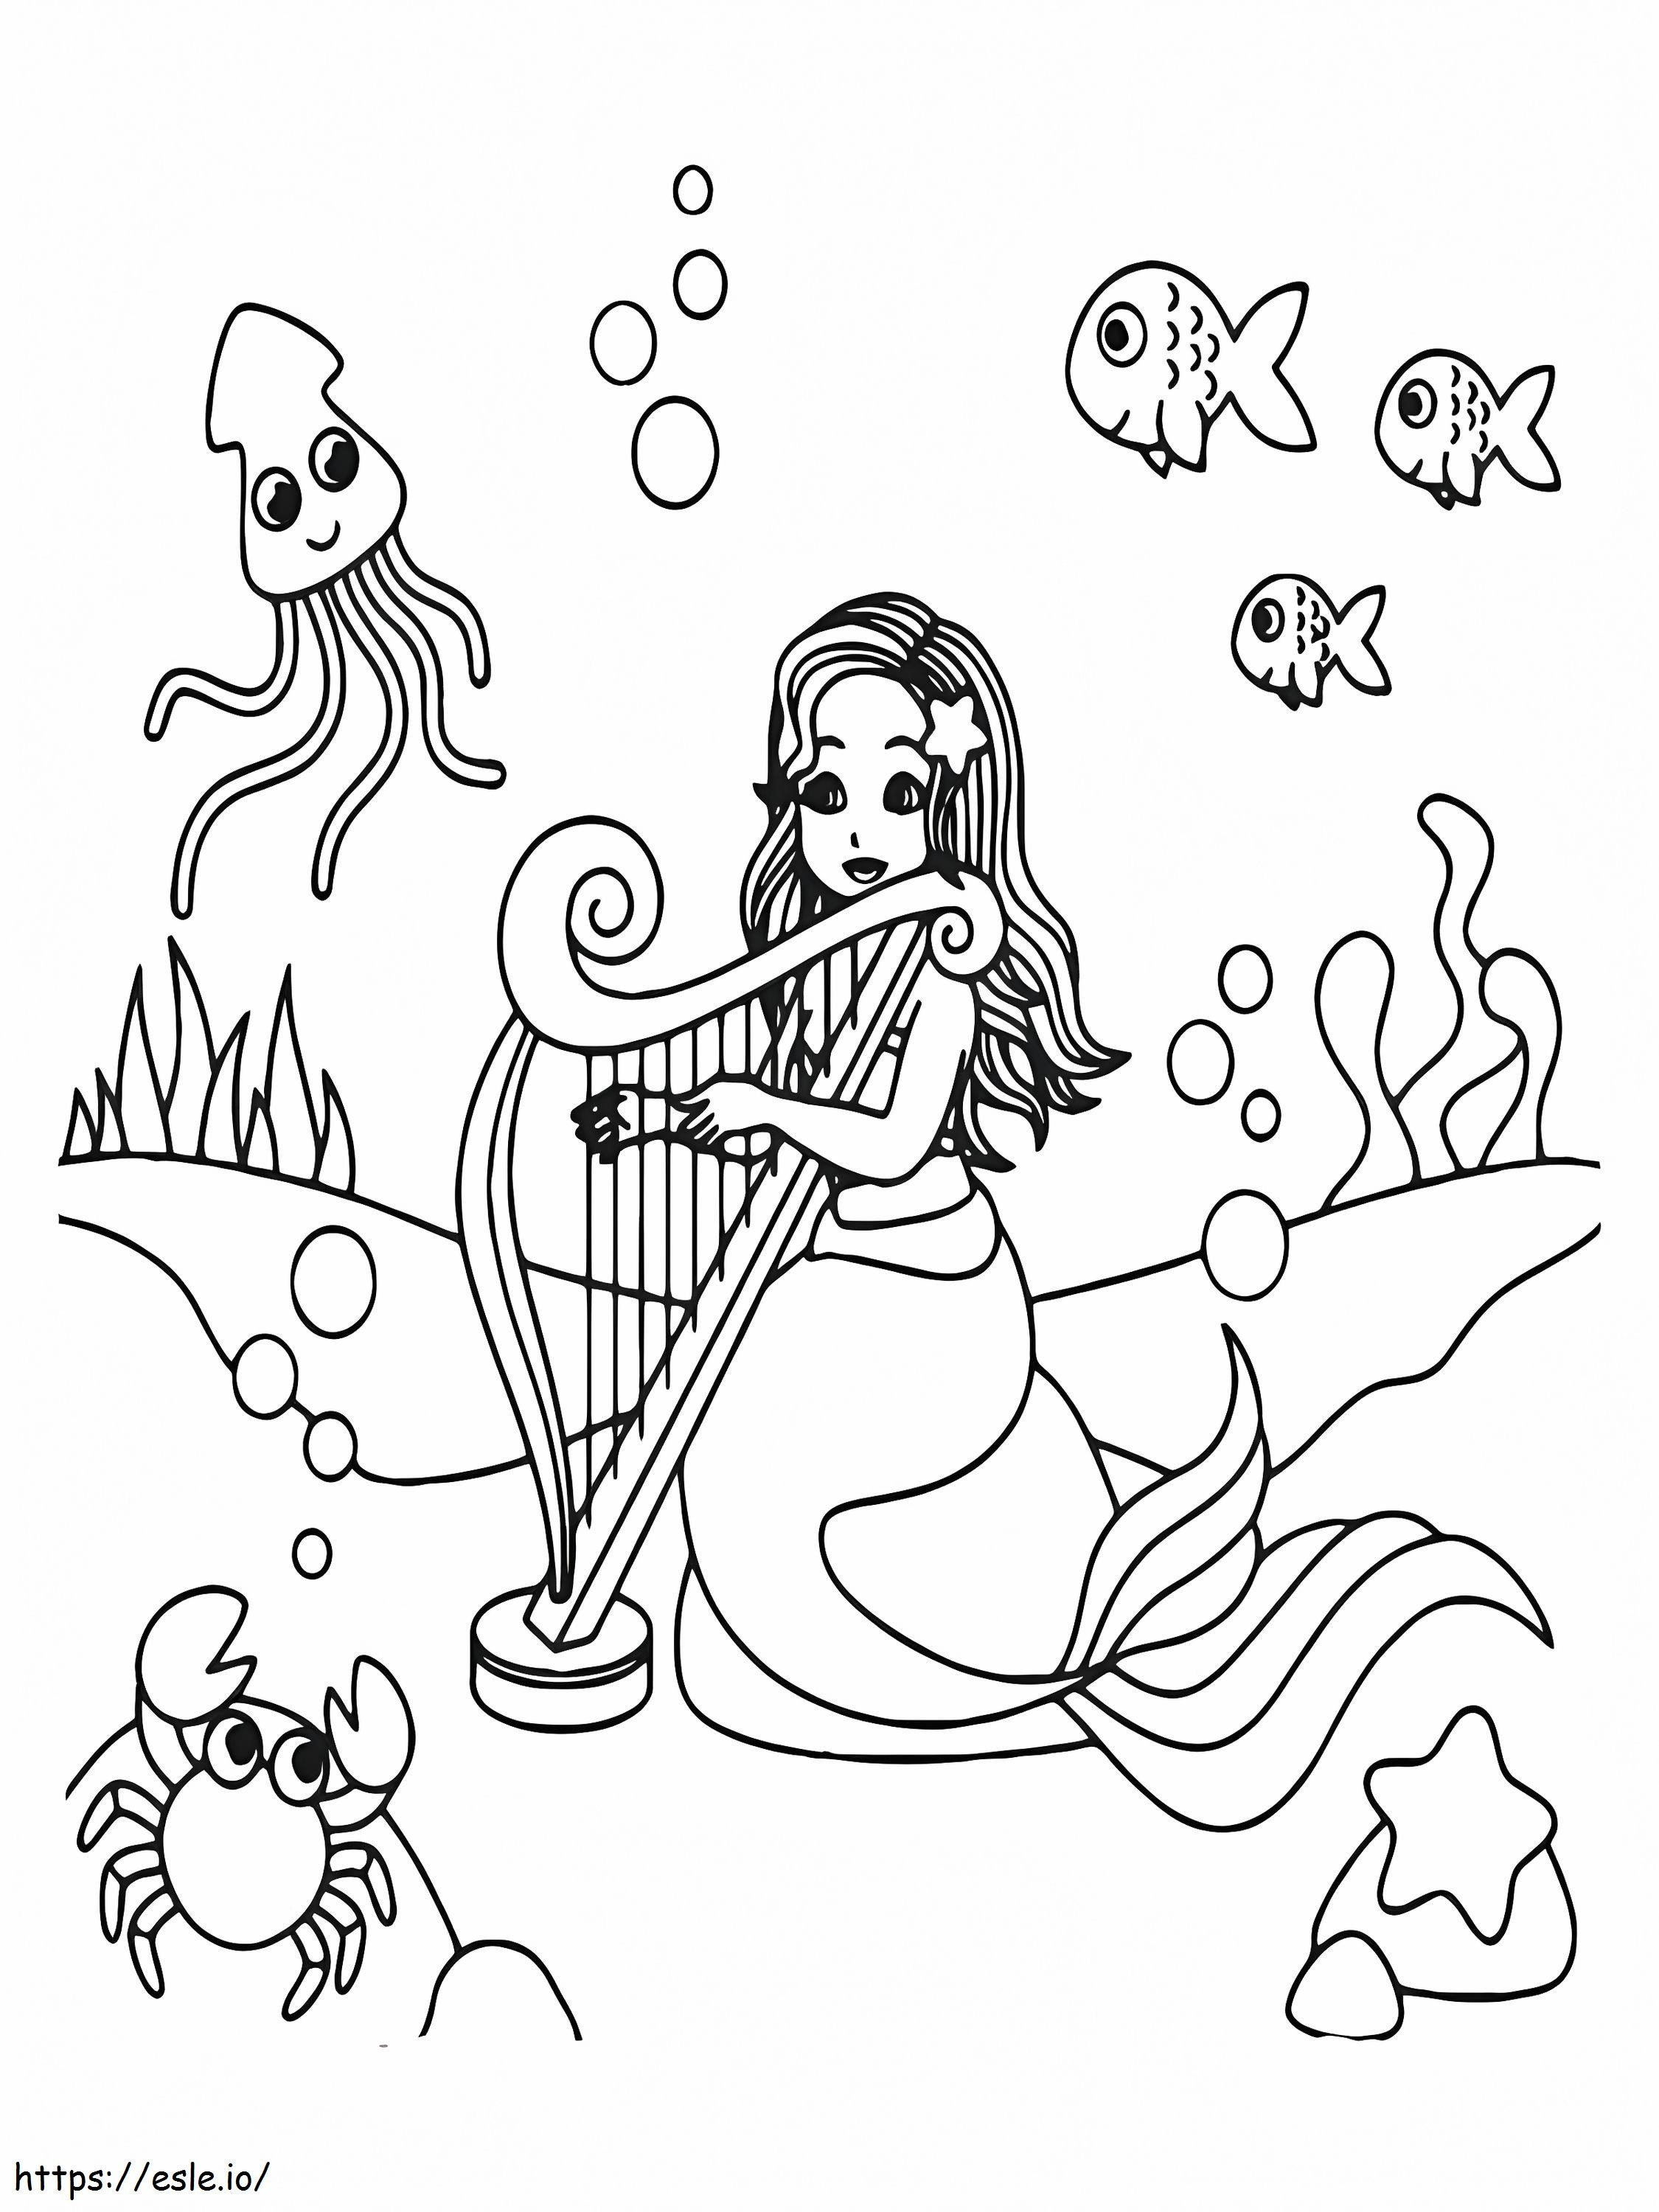 Meerjungfrau spielt Harfe mit Meerestieren ausmalbilder